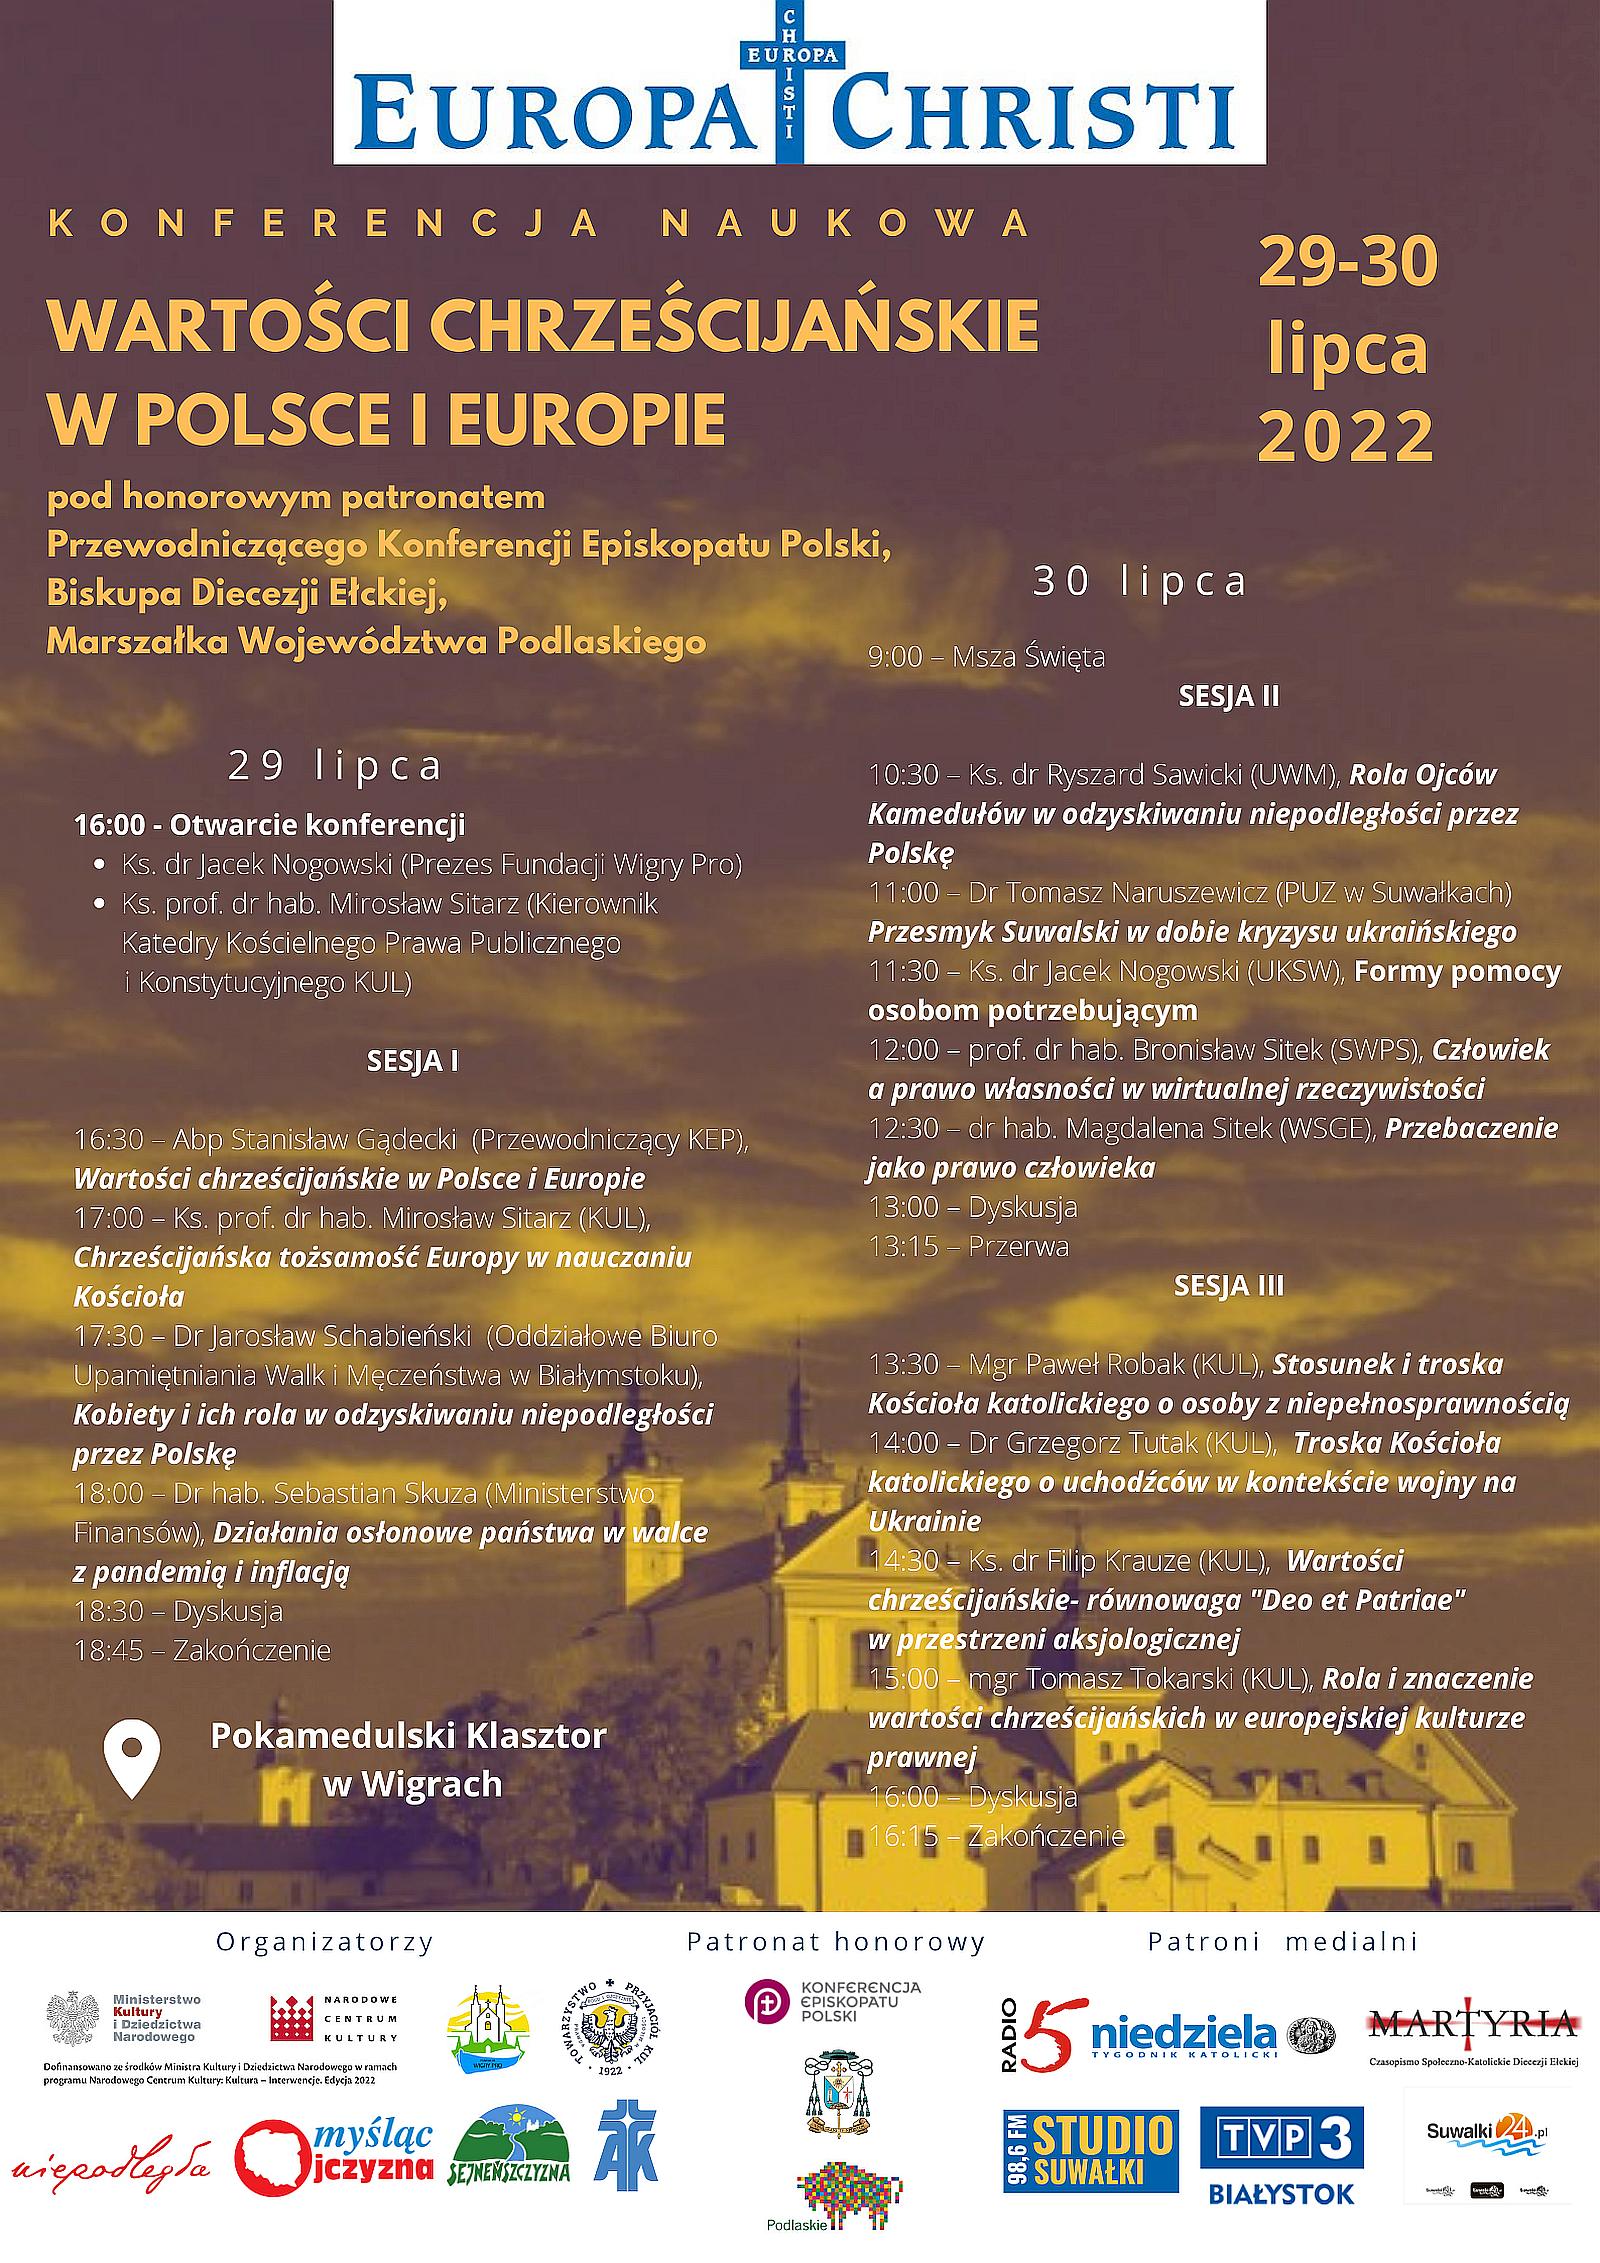 EUROPA CHRISTI - Konferencja Naukowa - Wigry 29-30.07.2022